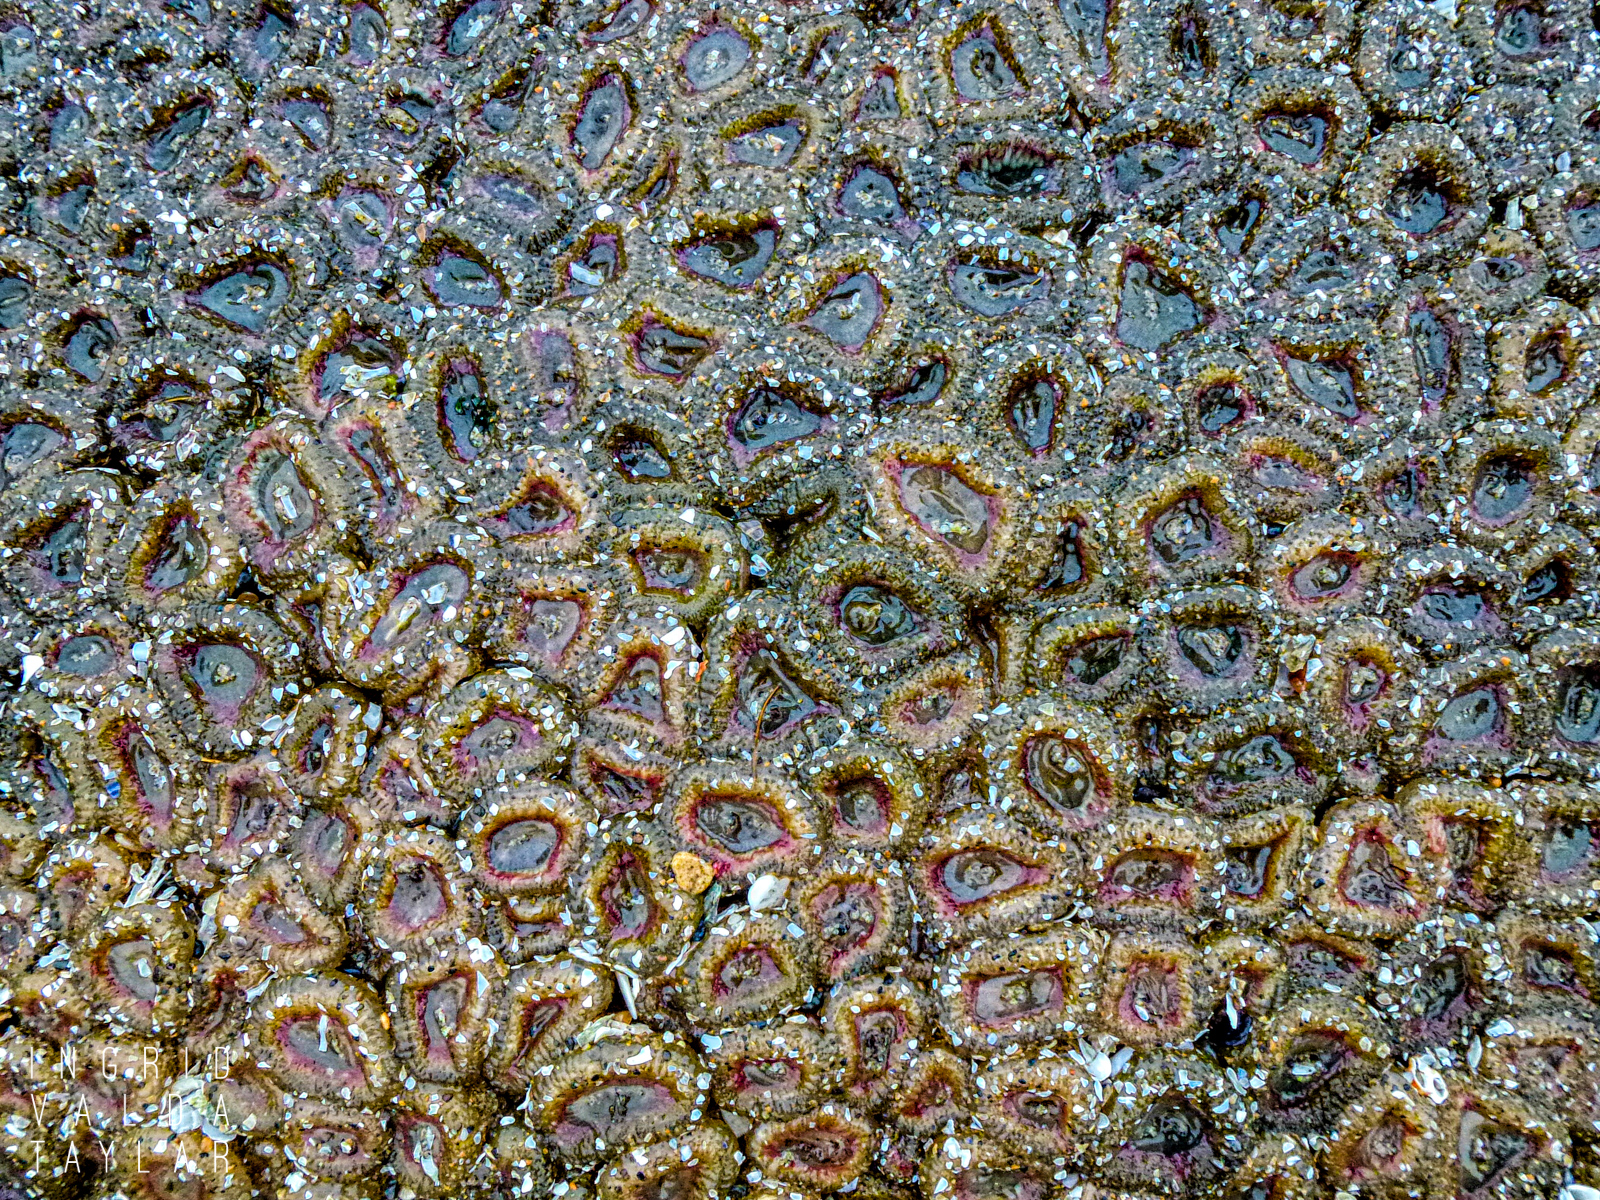 Aggregating Anemones on Oregon Coast 2